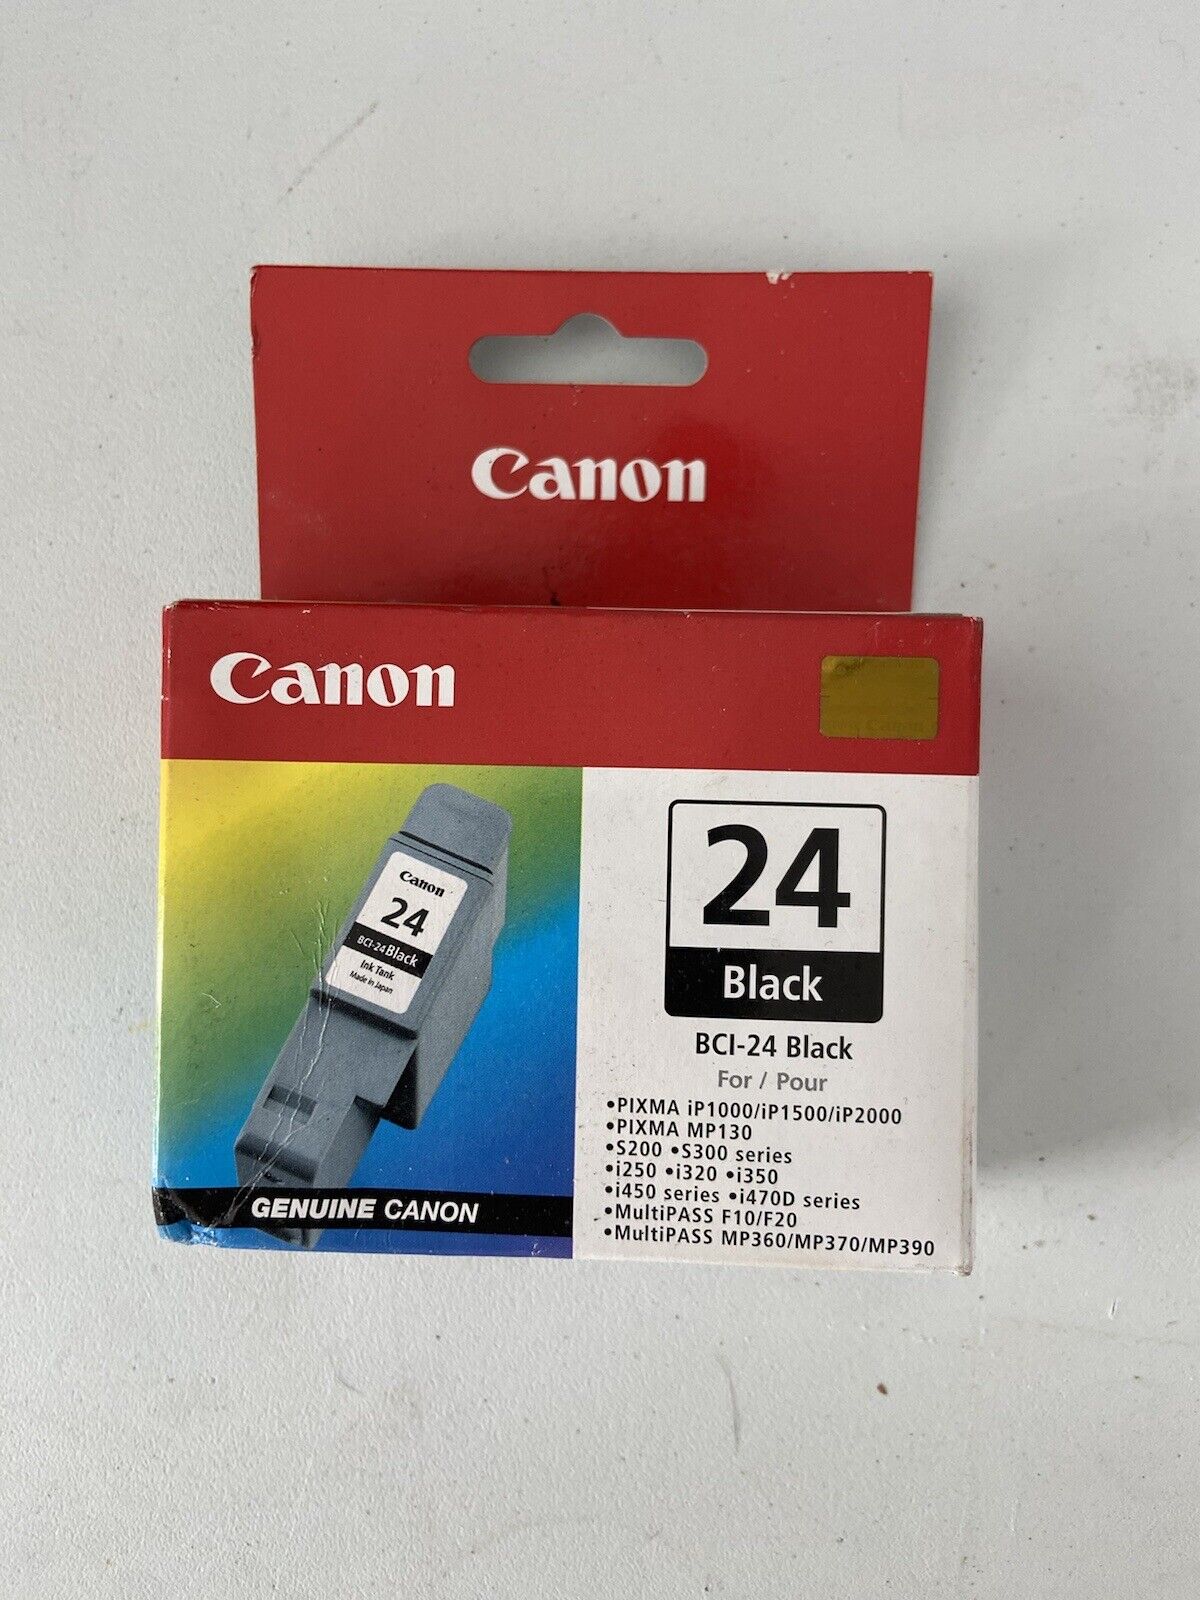 Genuine Canon BCI-24 Black Ink Cartridge Brand New in Box